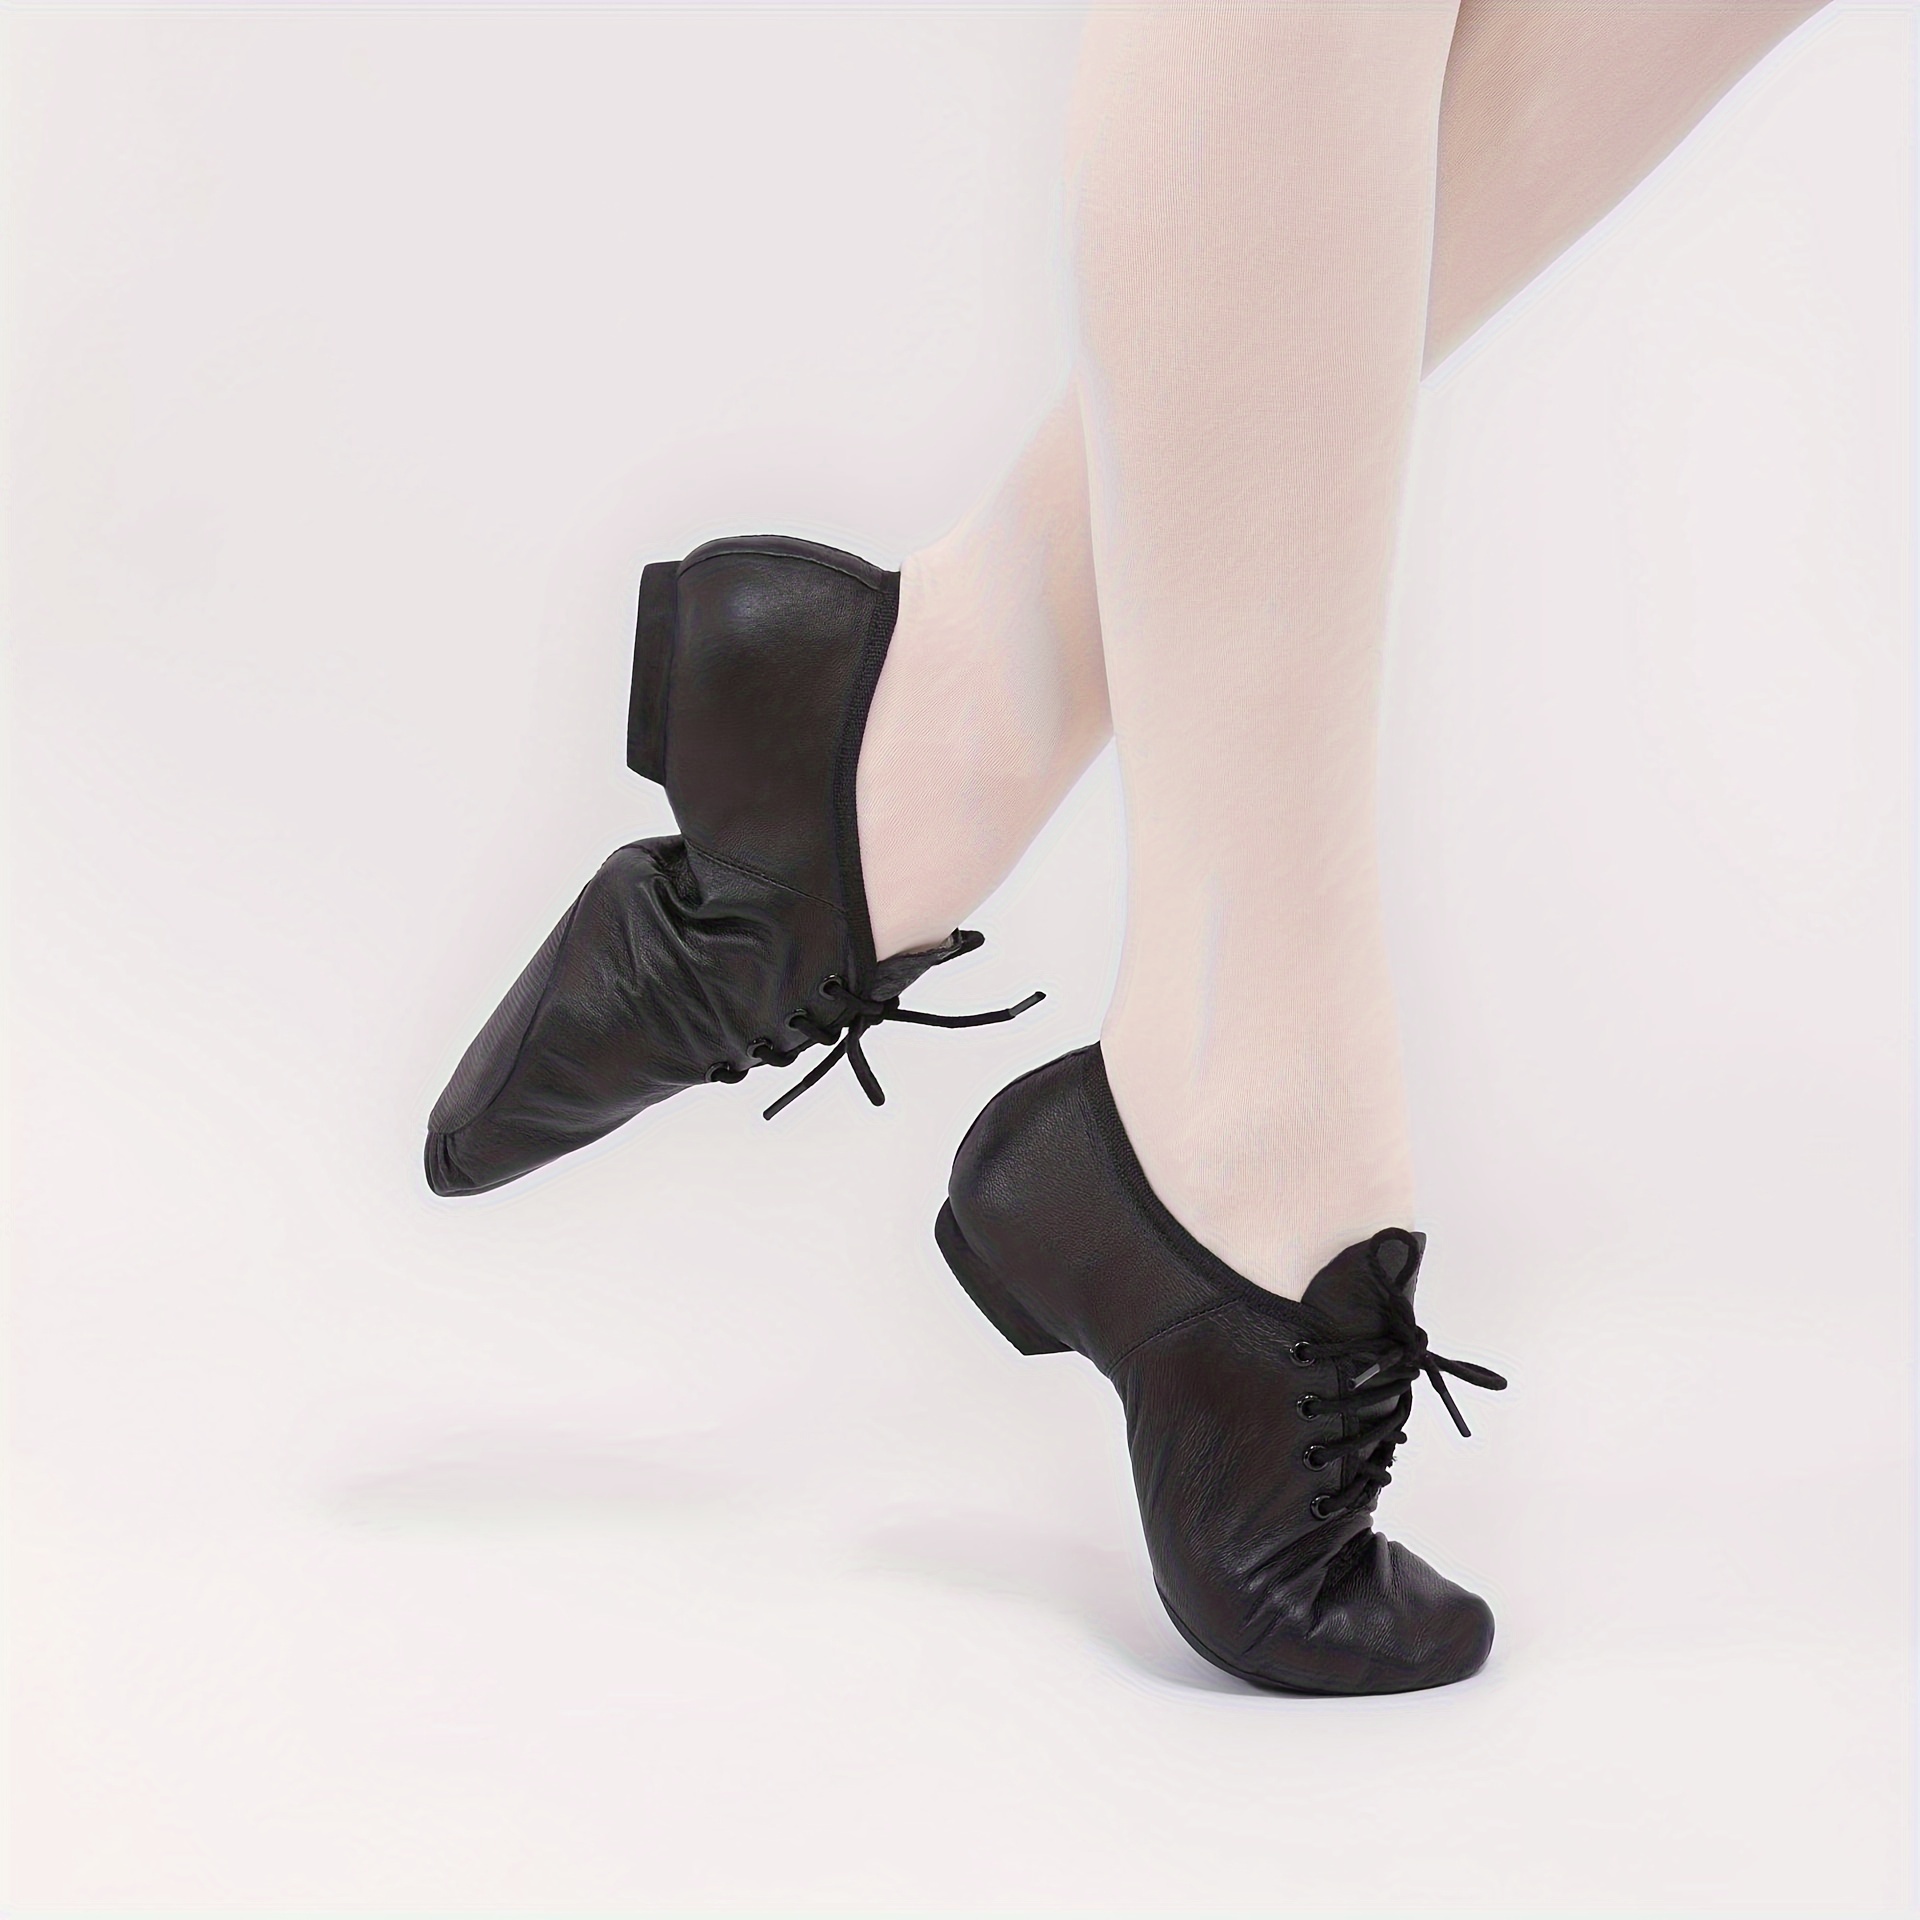 Women's Soft Sole Ballet Shoes: Lightweight & Comfortable For Dance, Barre  & Jazz!